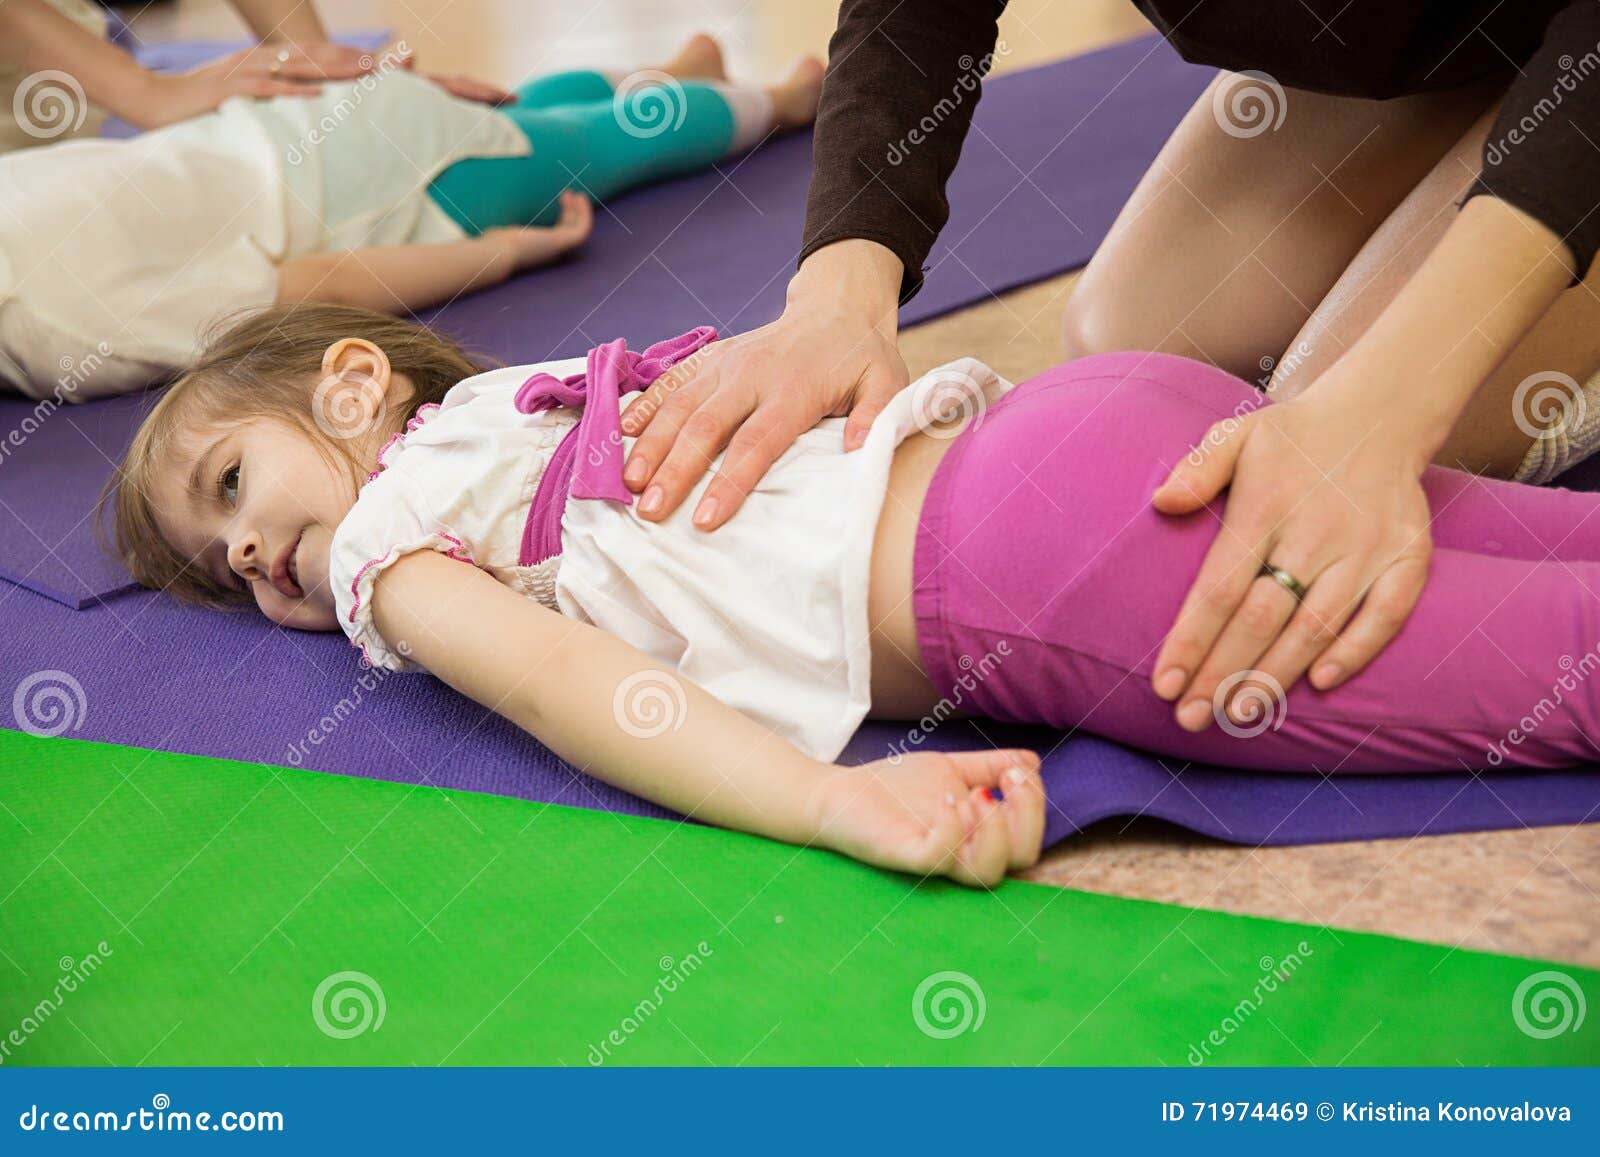 bonnie belton add photo mom and daughter massage